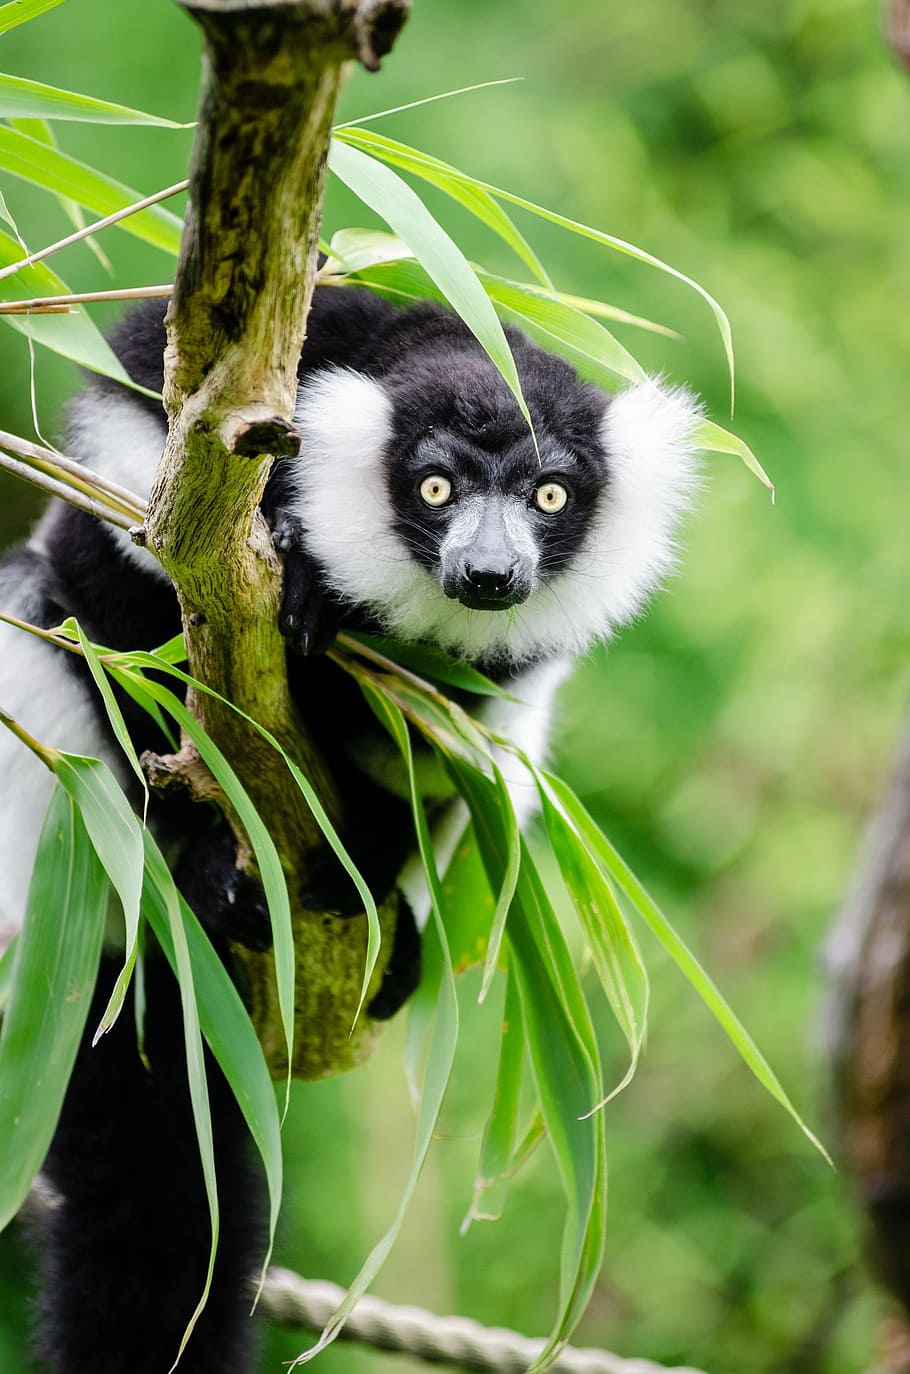 white and black animal on tree branch at daytime, black and white ruffed lemur